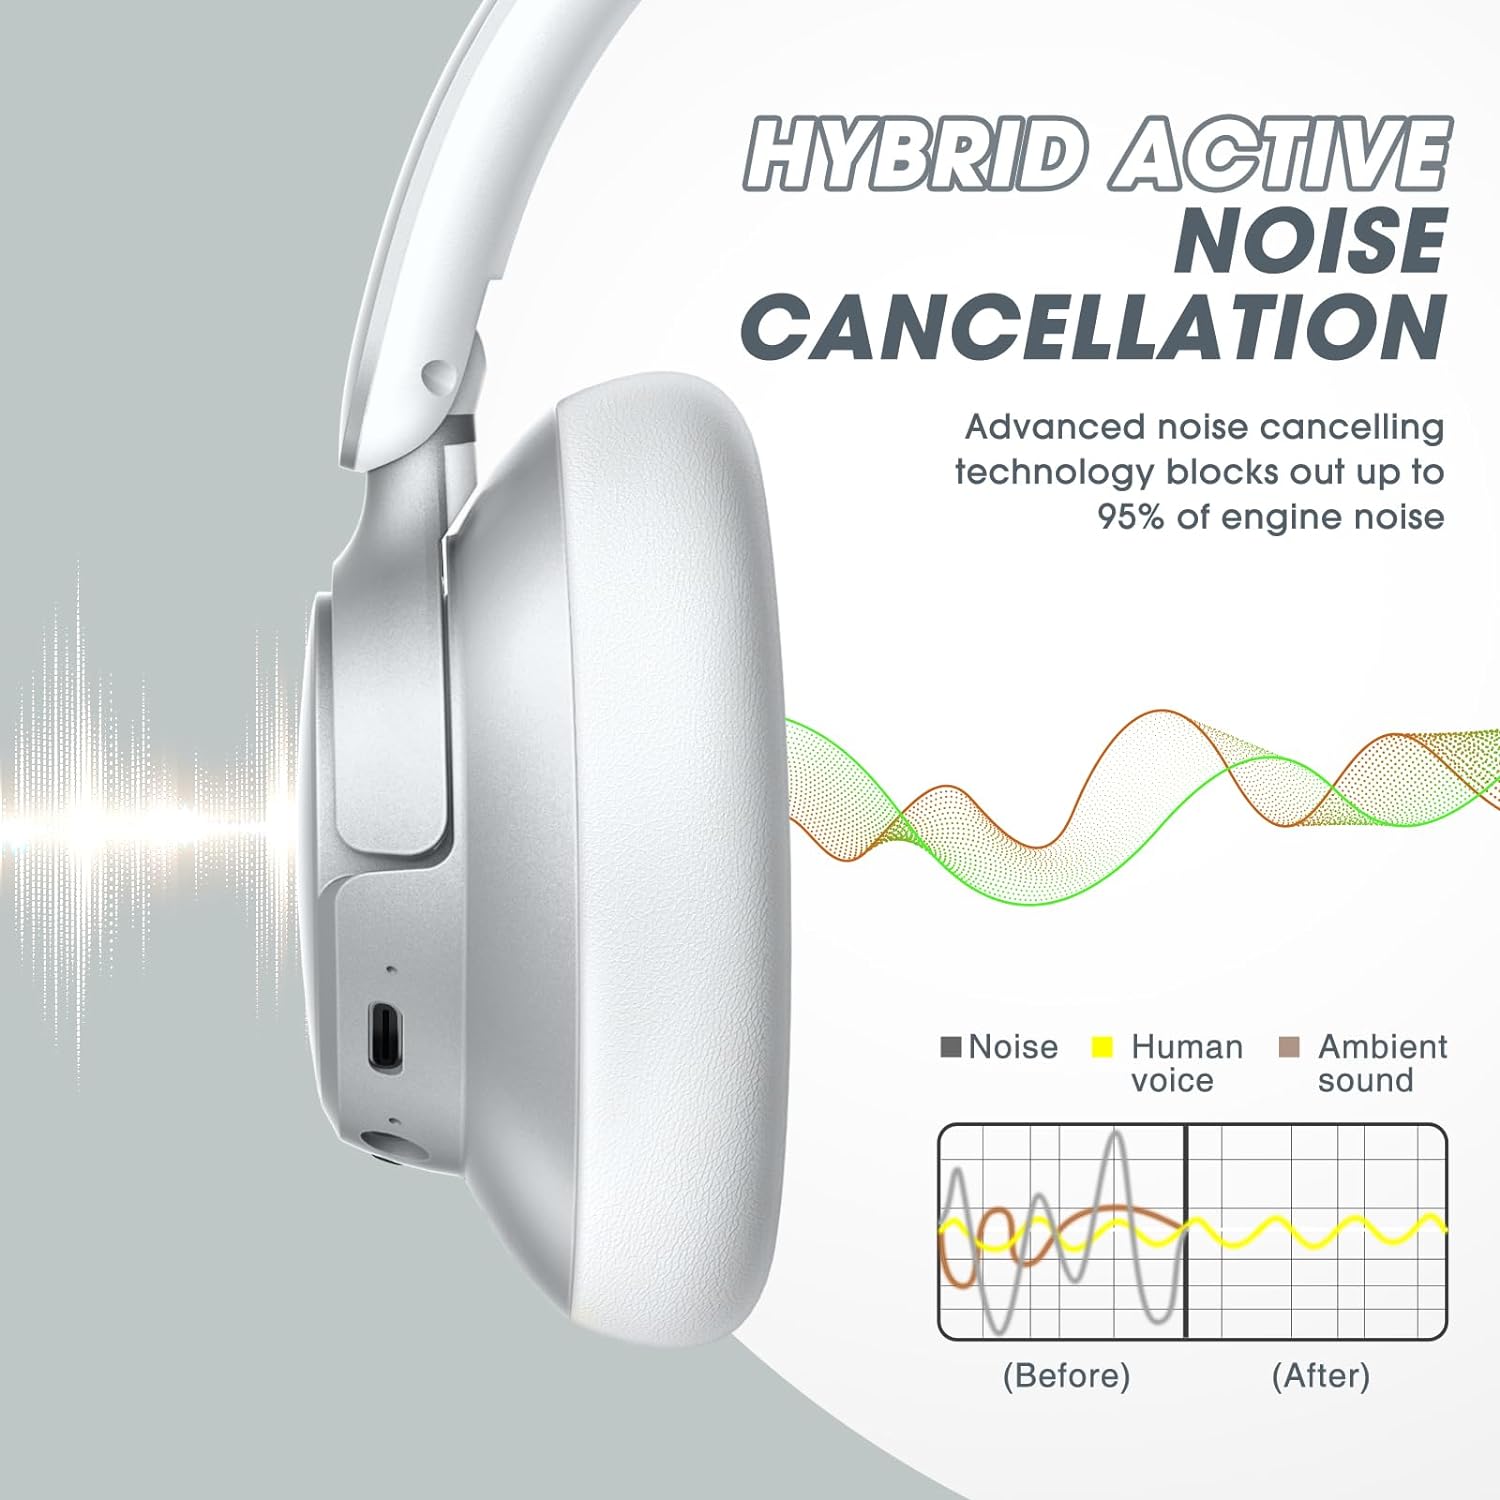 Auriculares híbridos con cancelación activa de ruido, auriculares Bluetooth  inalámbricos sobre la oreja con micrófono de graves profundos, auriculares